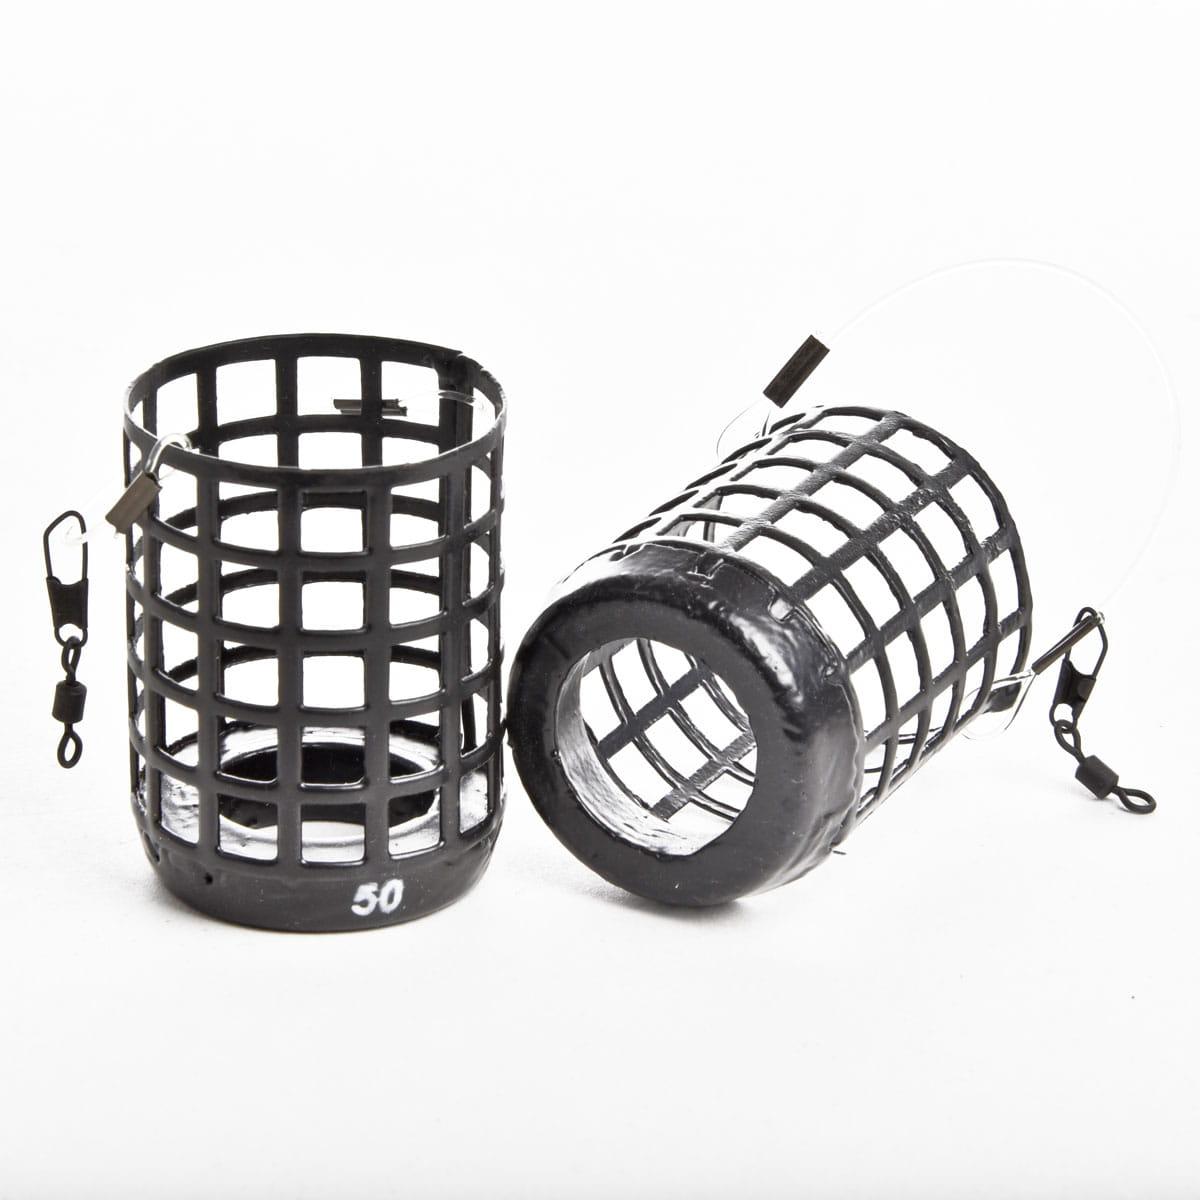 SpeedKorf Wire Cage Ring